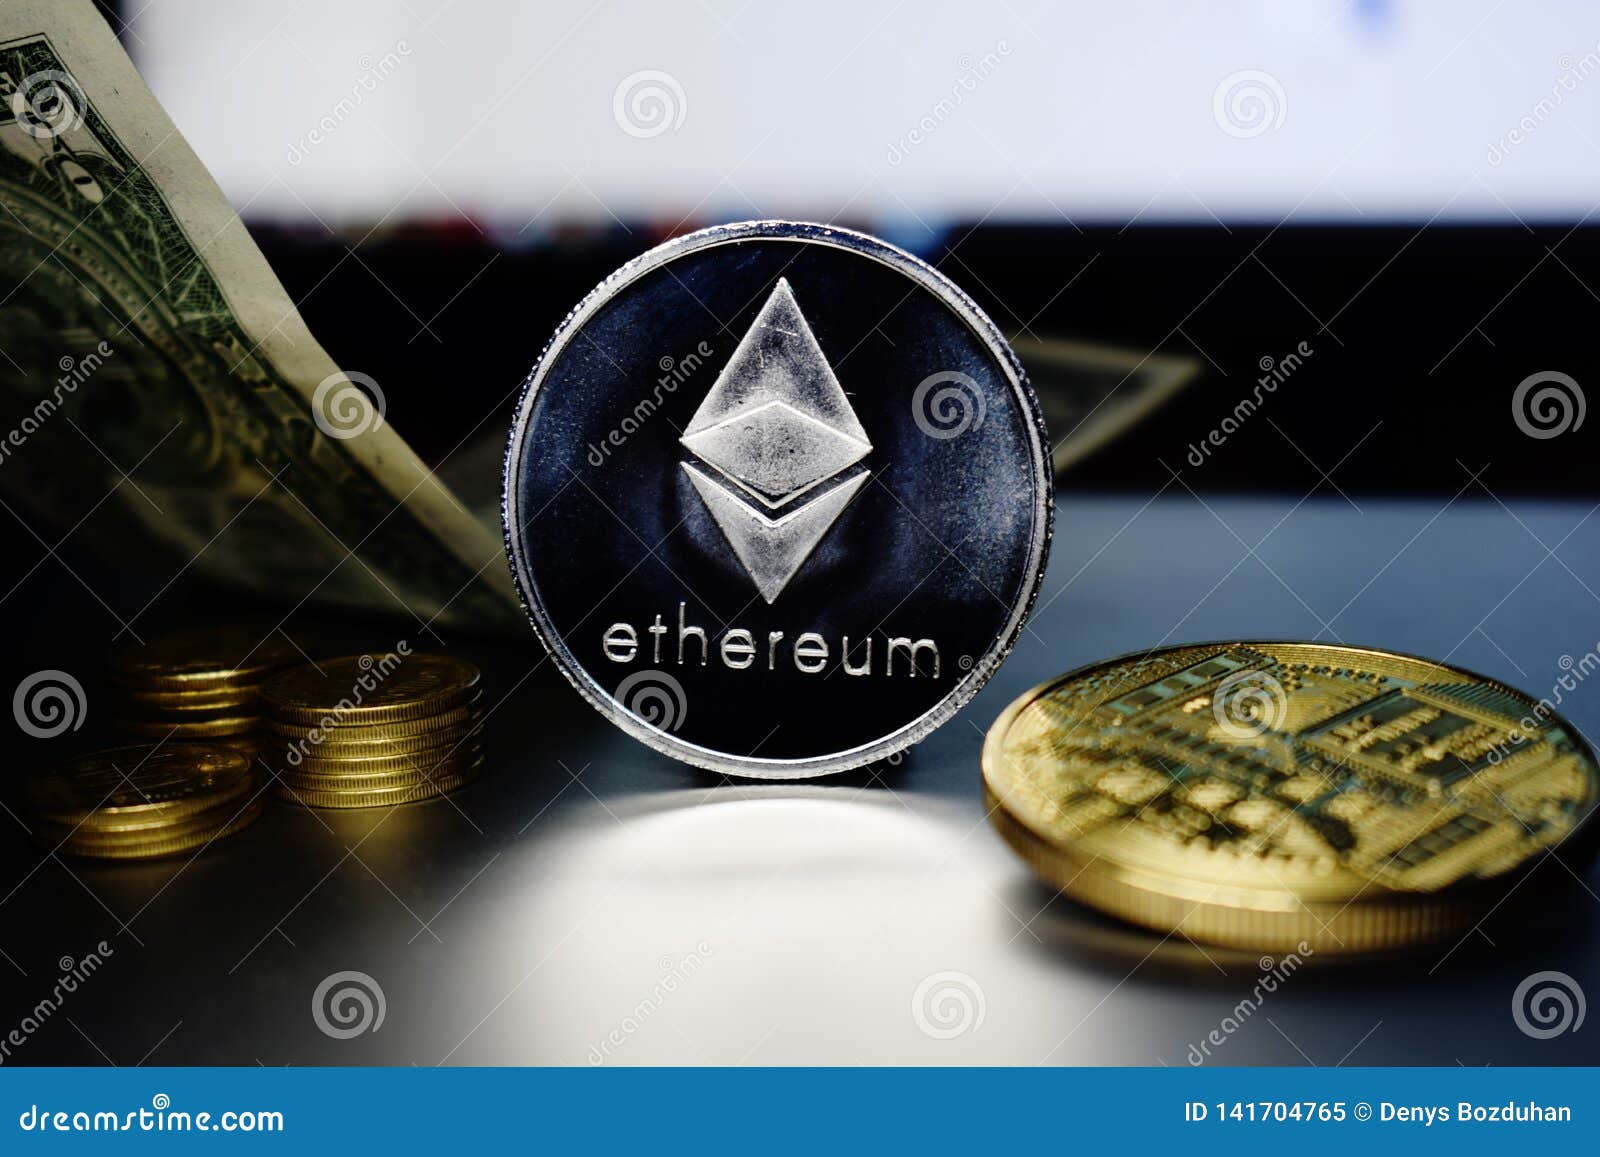 ethereum coin website